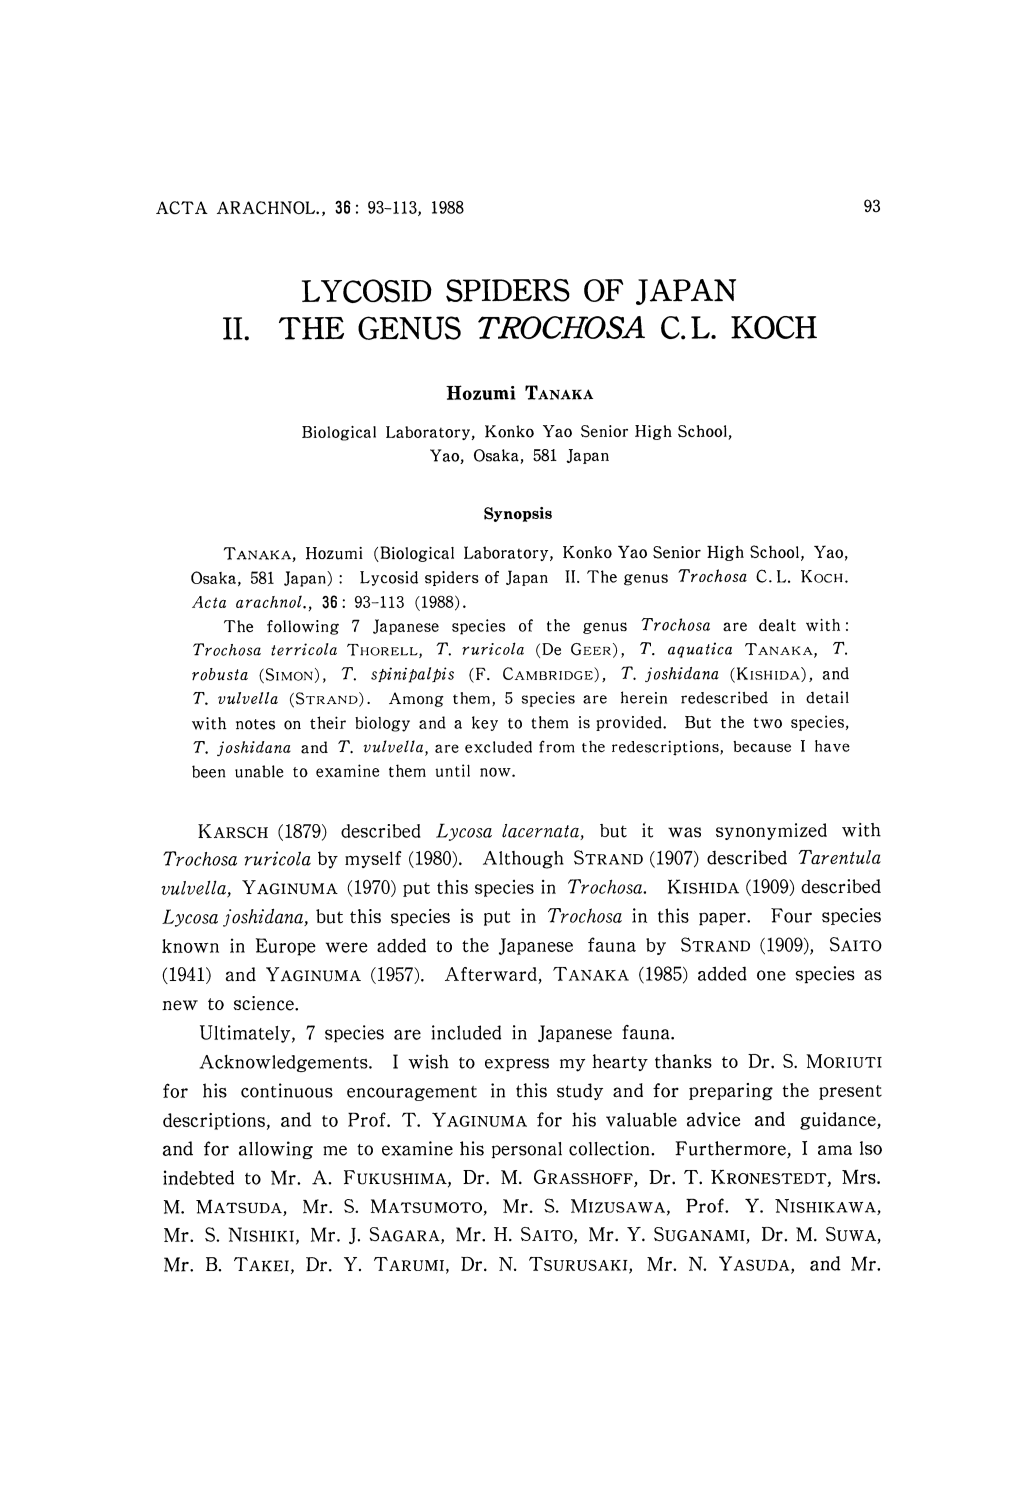 Lycosid Spiders of Japan the Genus Trochosa C.L. Koch